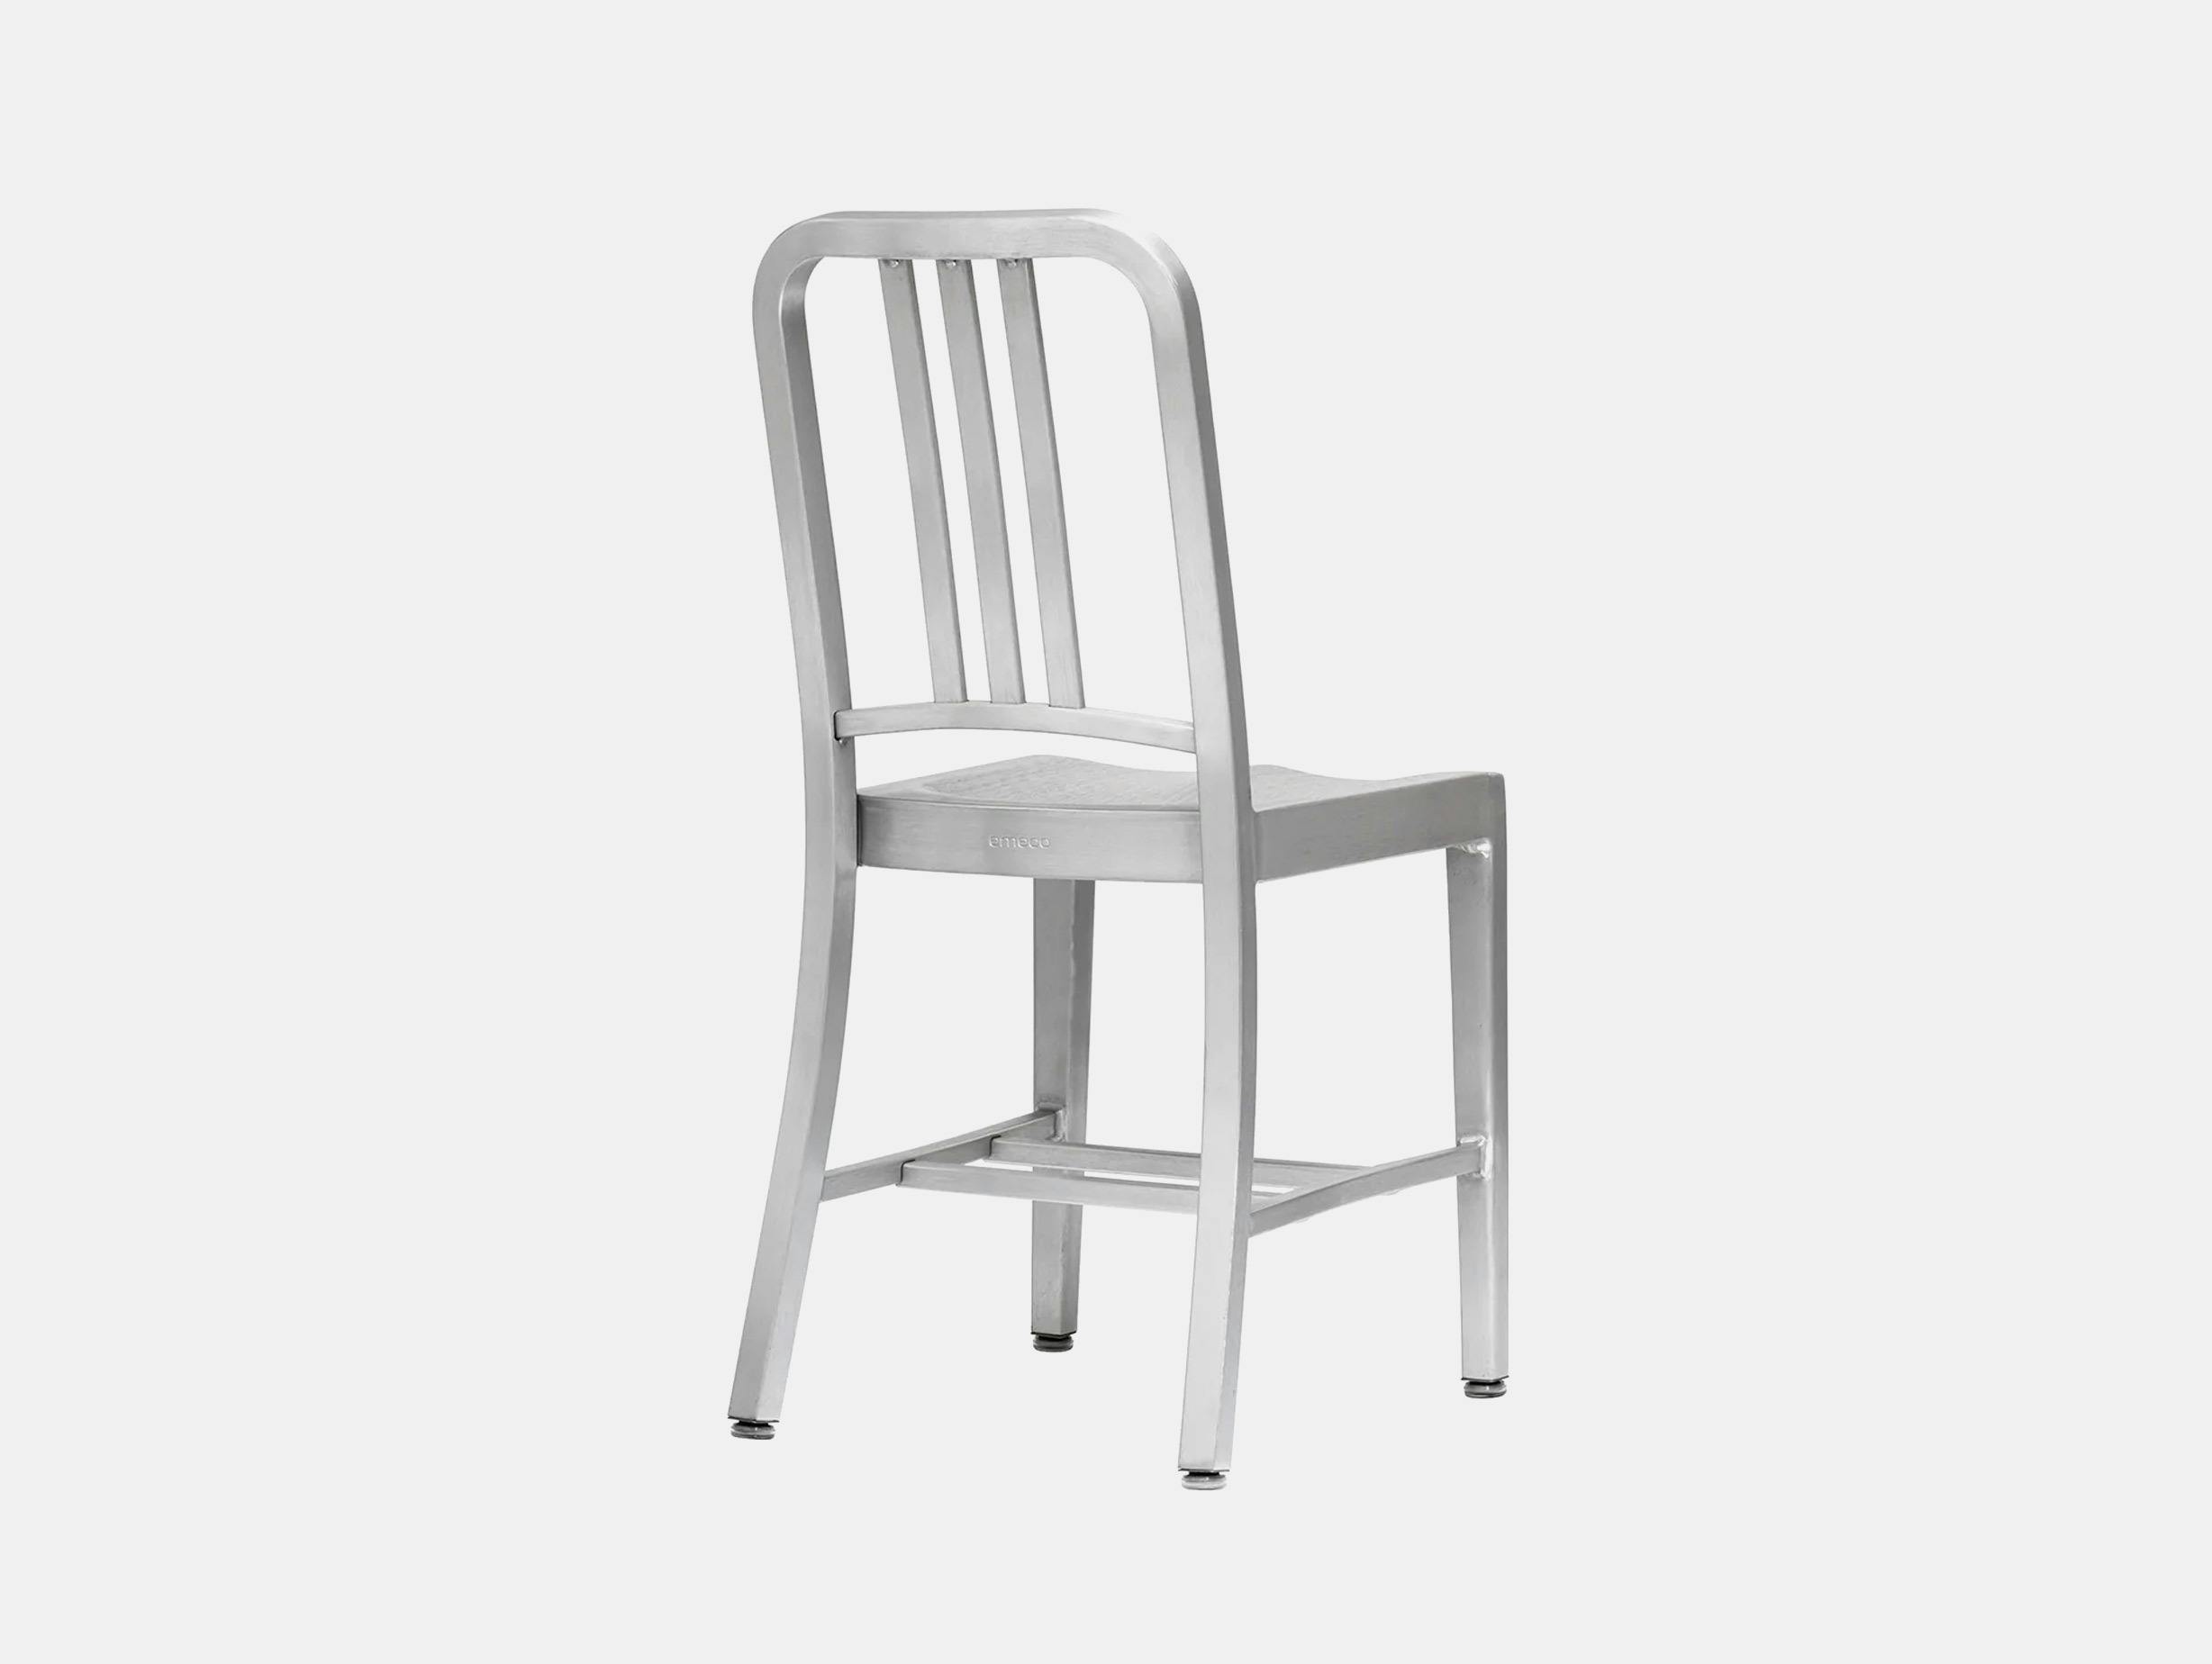 Emeco navy chair 1006 brushed aluminium3